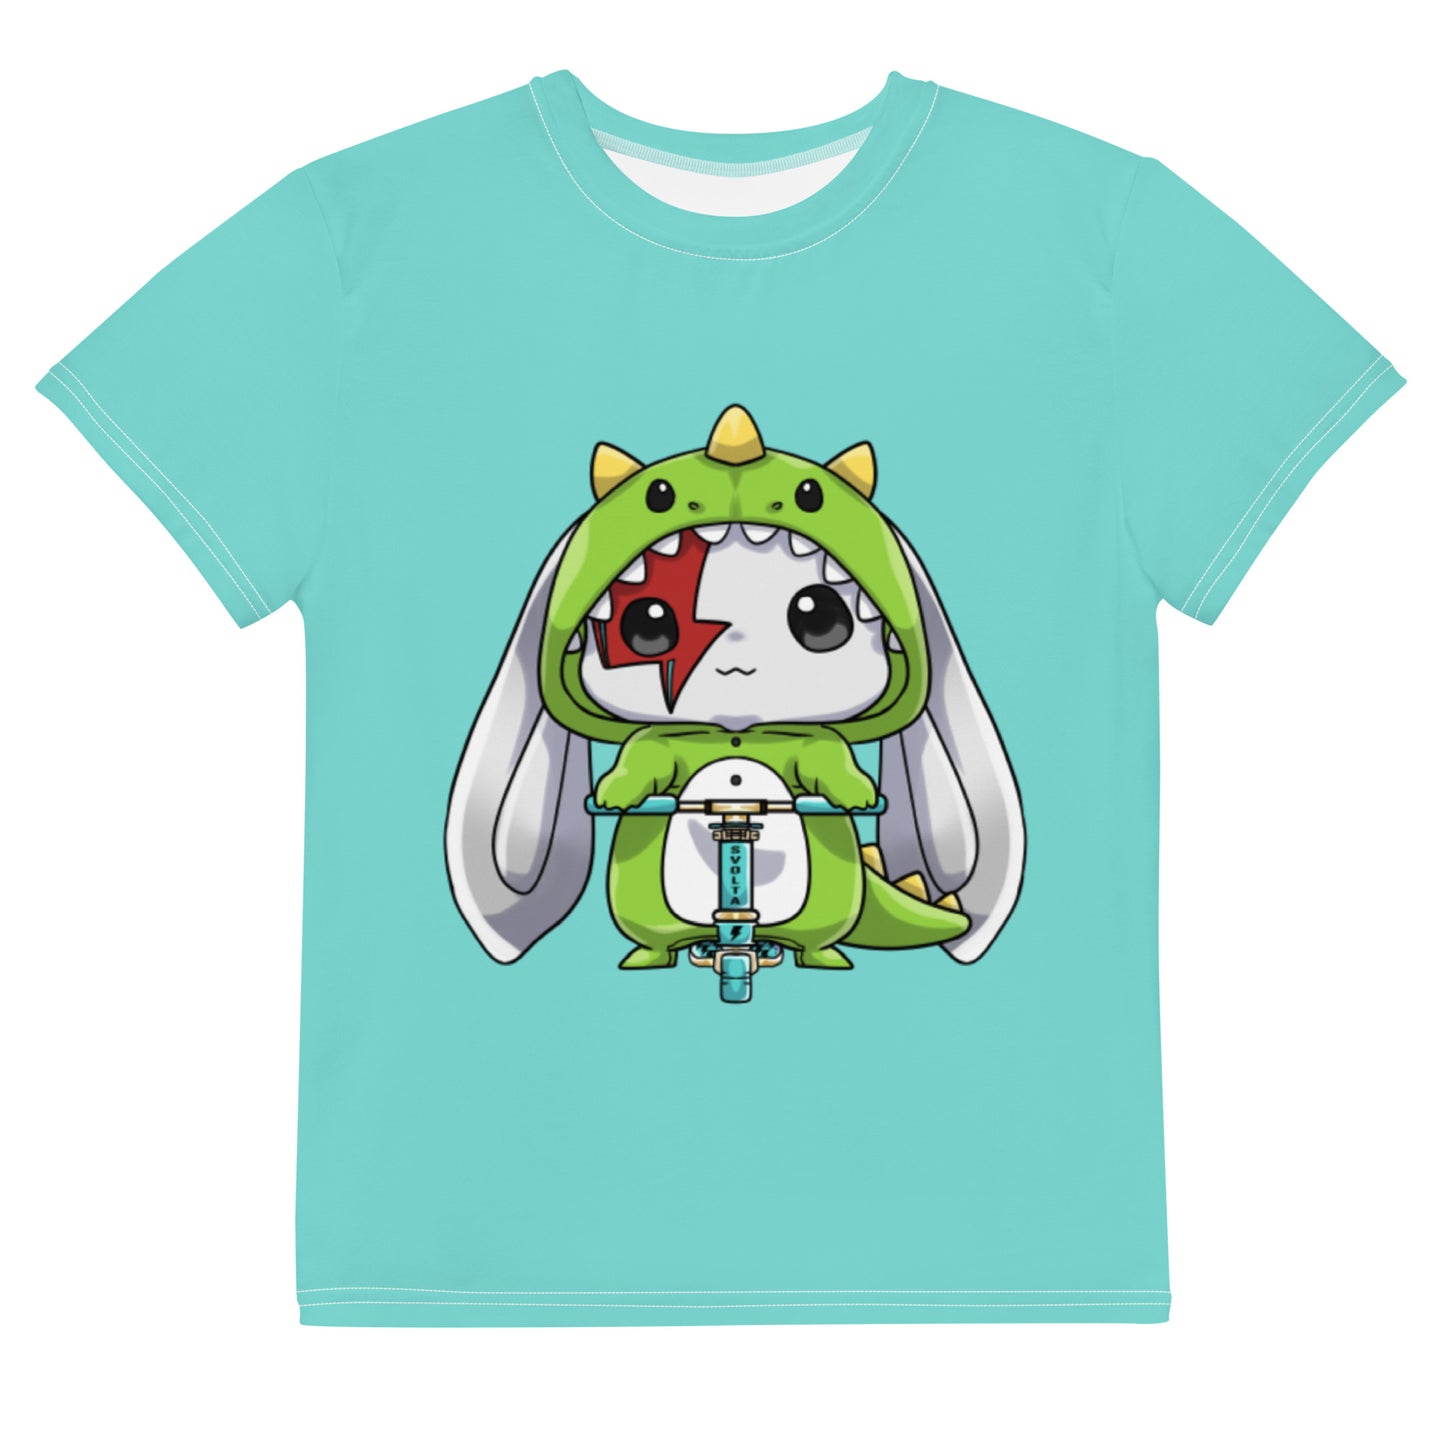 SVOLTA Kawaii Rebel Dino T-shirt in Aqua, 8-20 - Kids/Youth